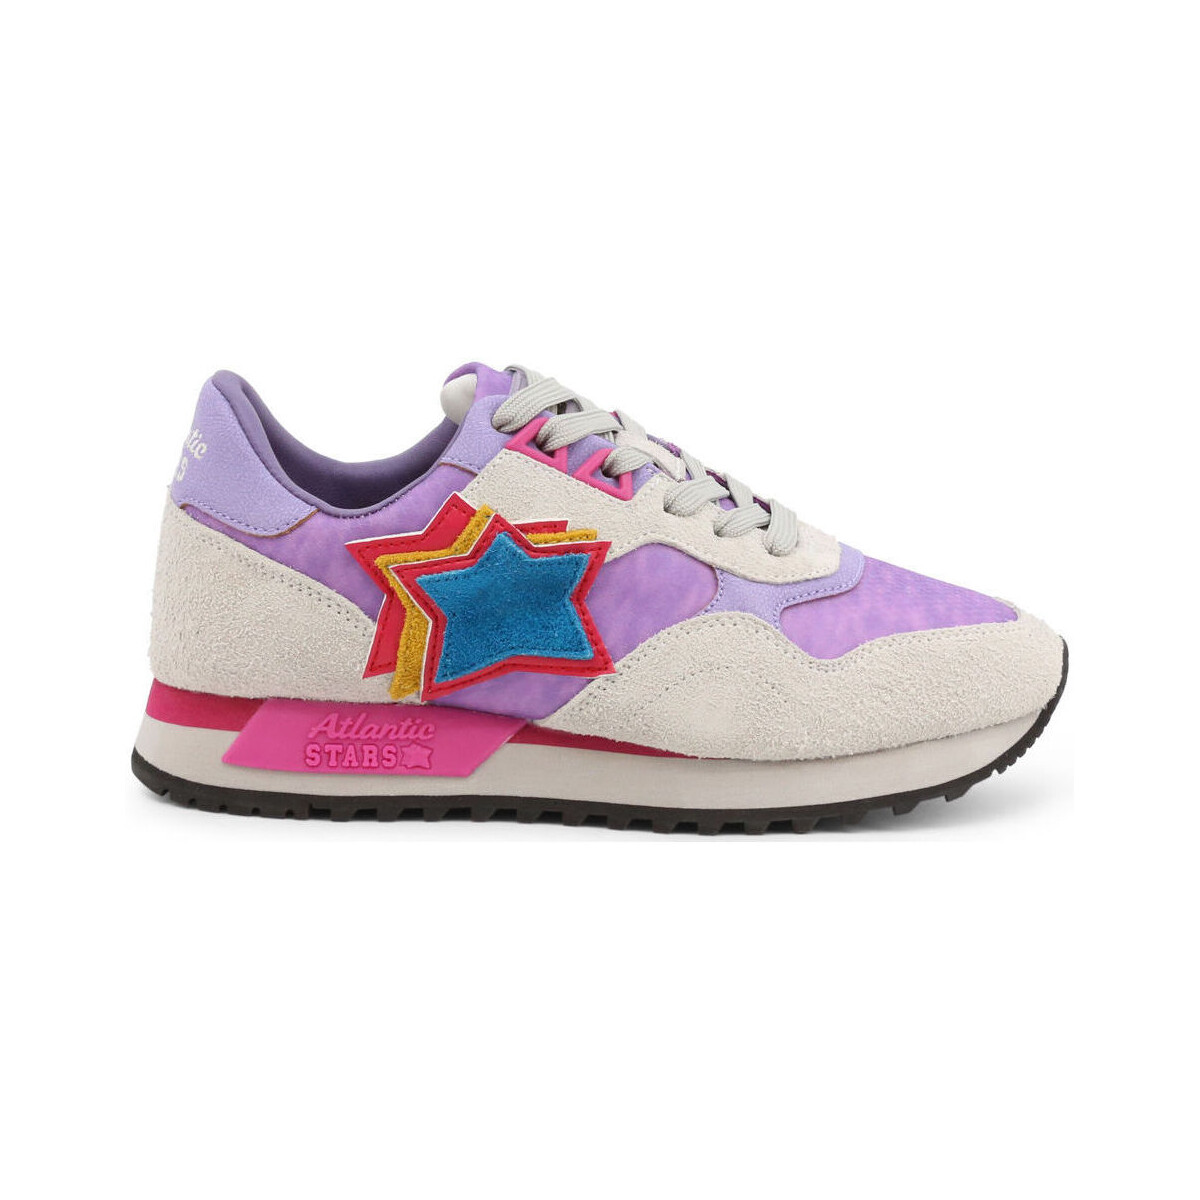 Sko Dame Sneakers Atlantic Stars ghalac-ylbl-dr23 violet Violet